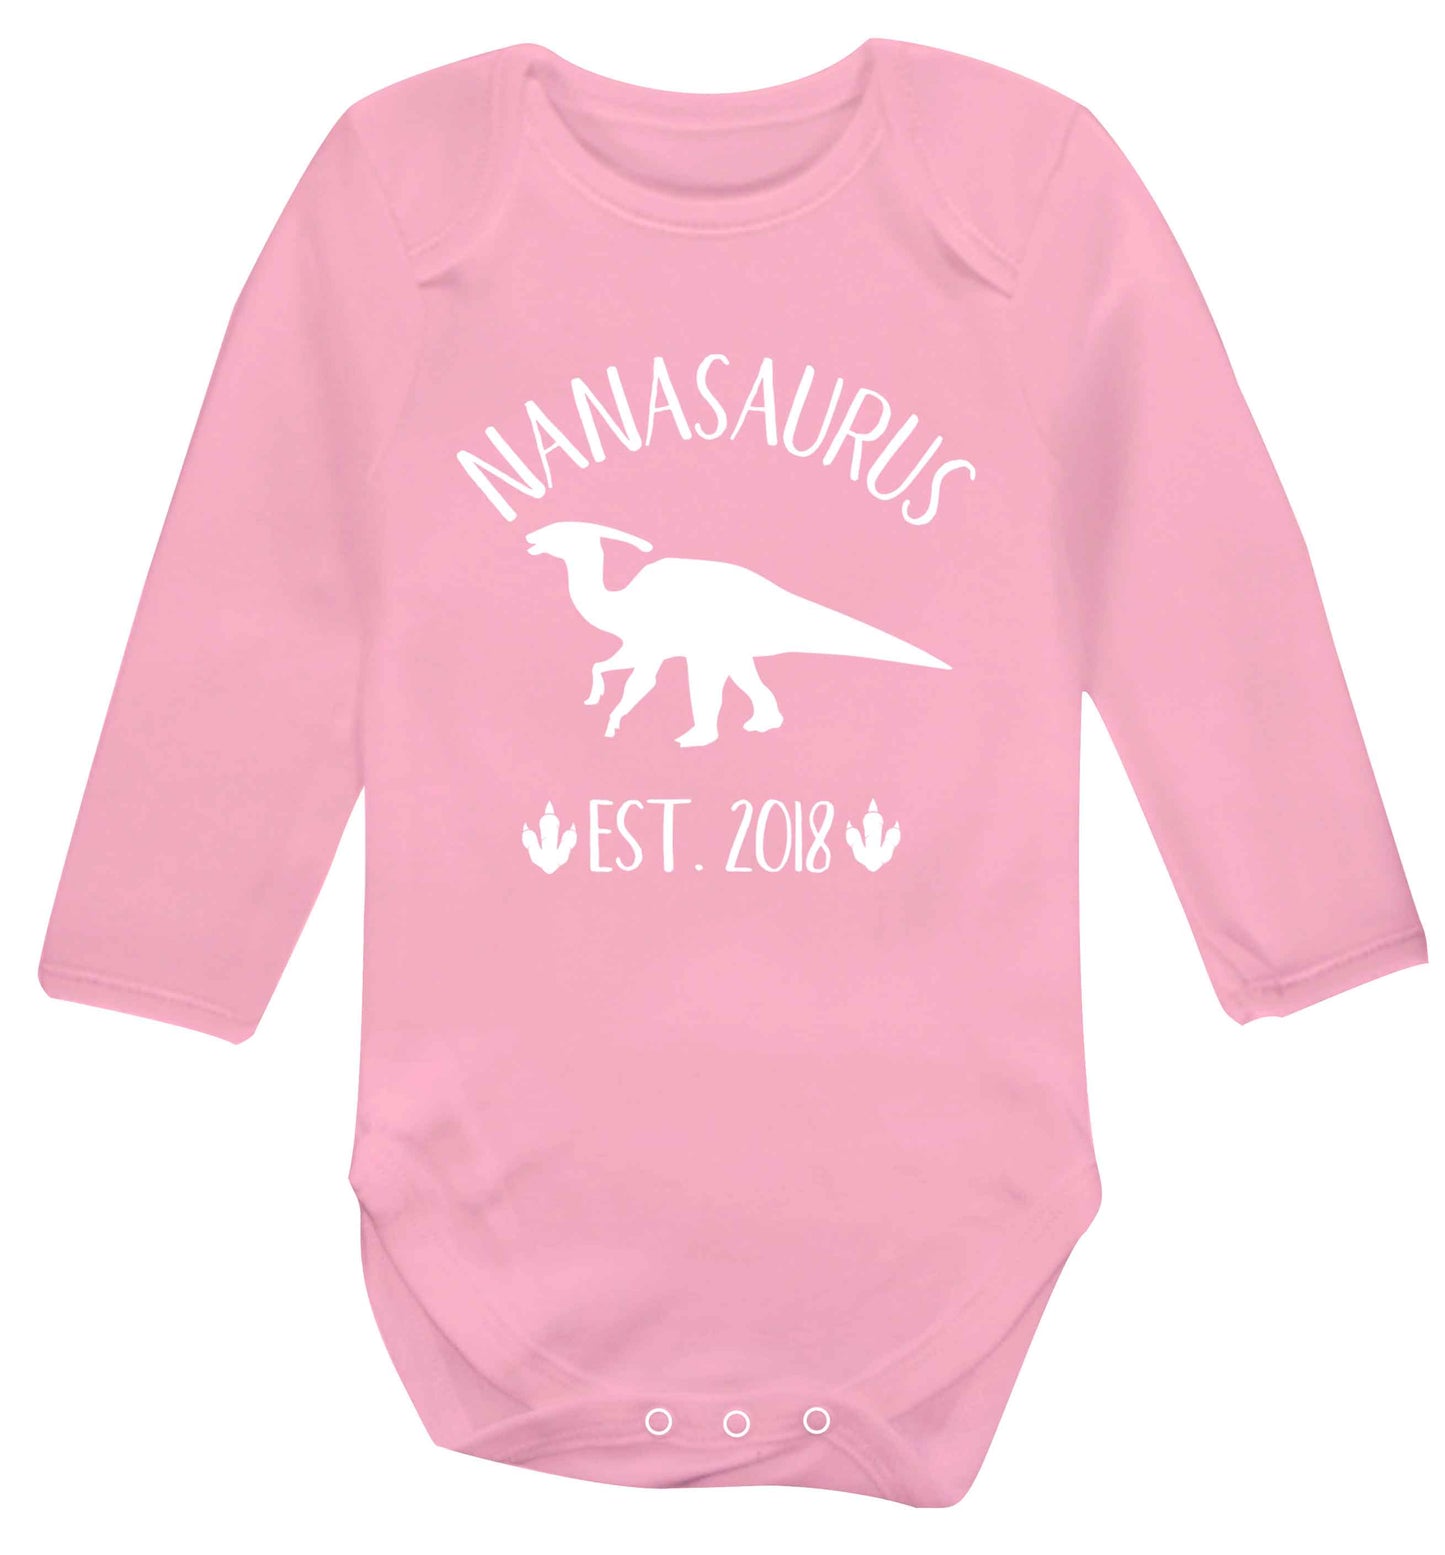 Personalised nanasaurus since (custom date) Baby Vest long sleeved pale pink 6-12 months